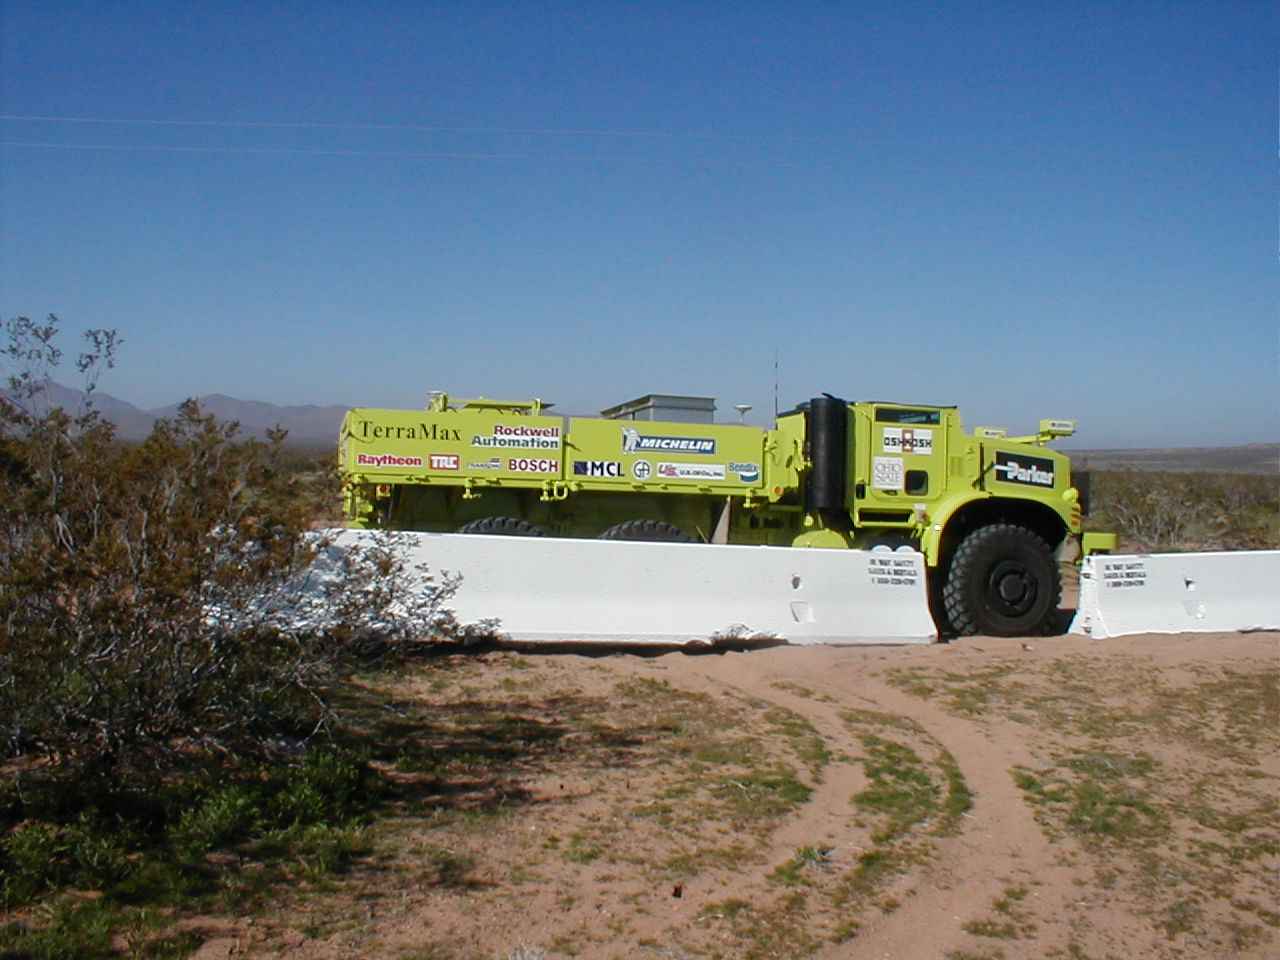 Team TerraMax's 5-ton truck tools down the road, sans driver